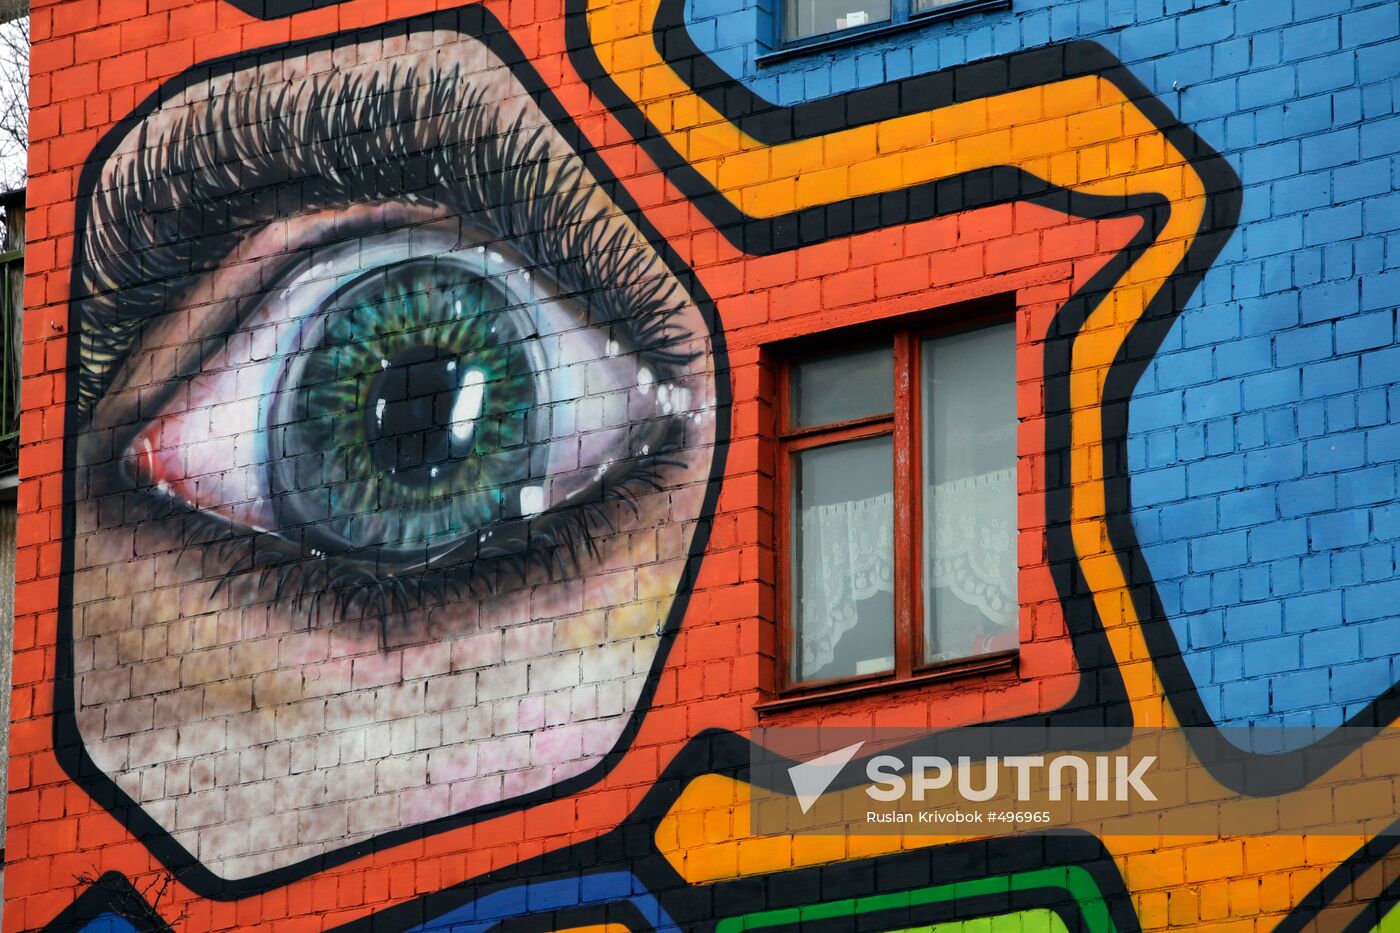 Graffiti on a condominium wall in Moscow